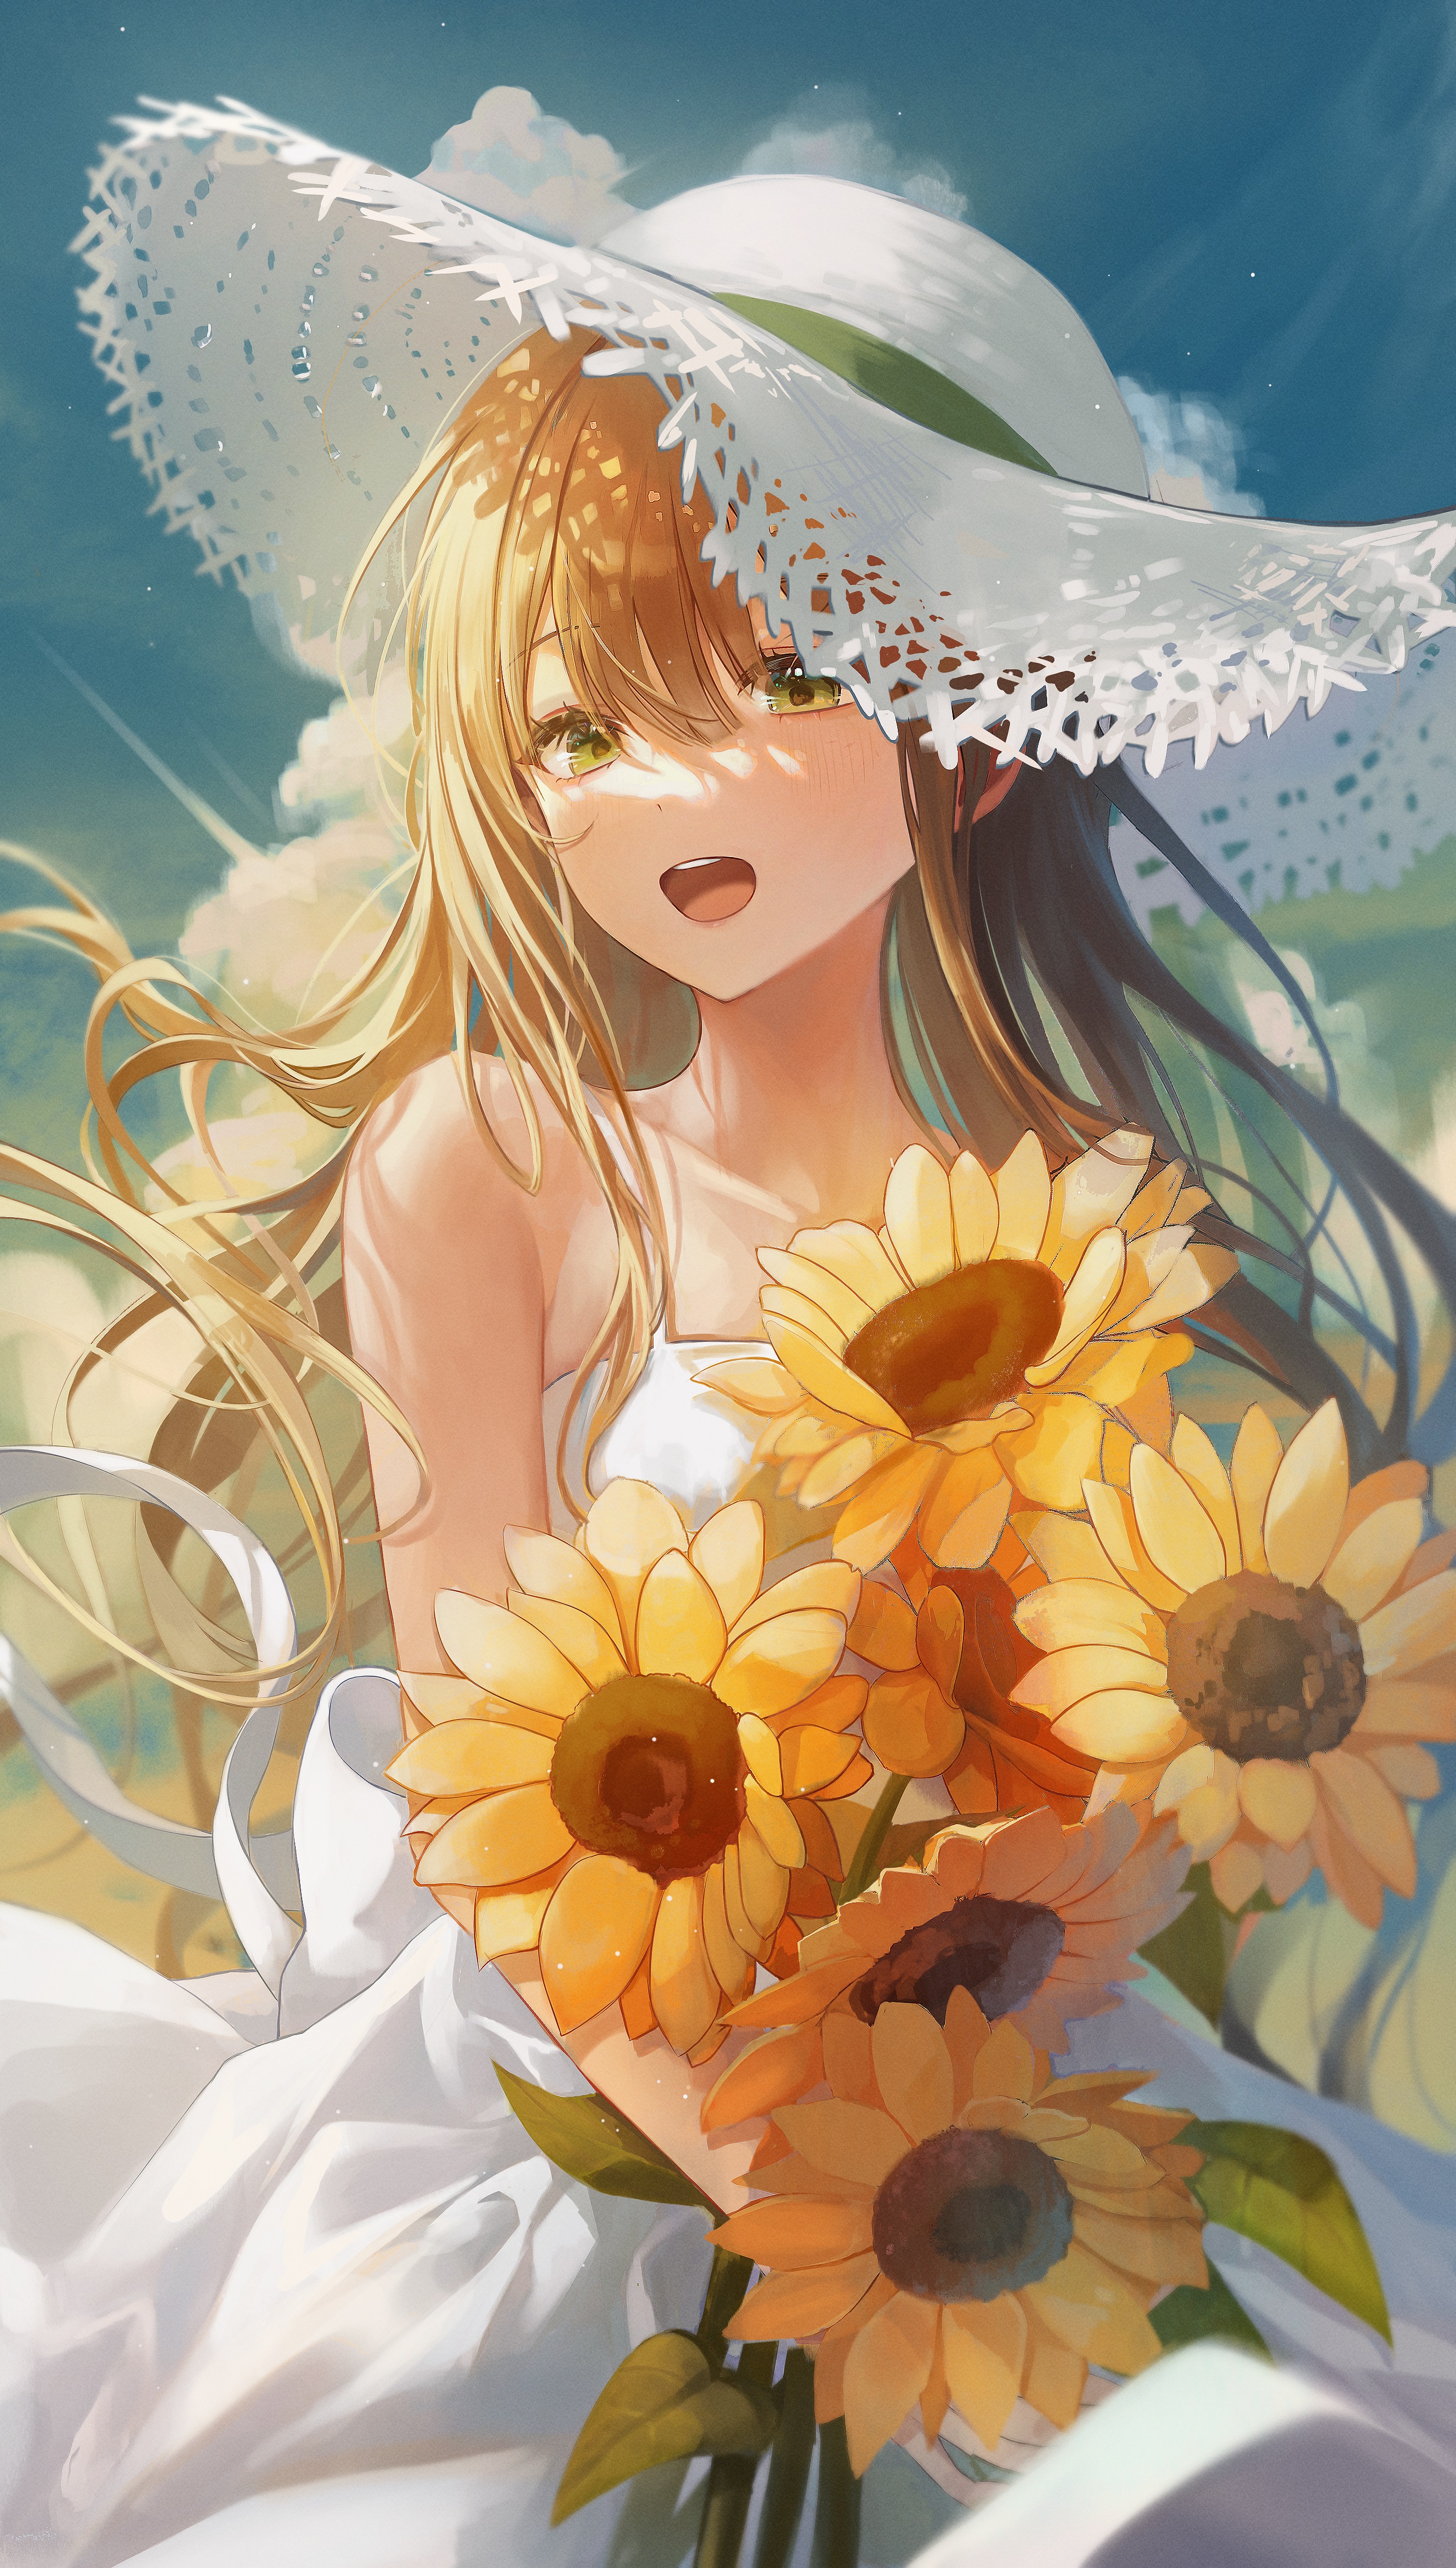 Anime 2713x4785 anime anime girls original characters artwork digital art fan art hat sunflowers sun dress sun hats Myowa